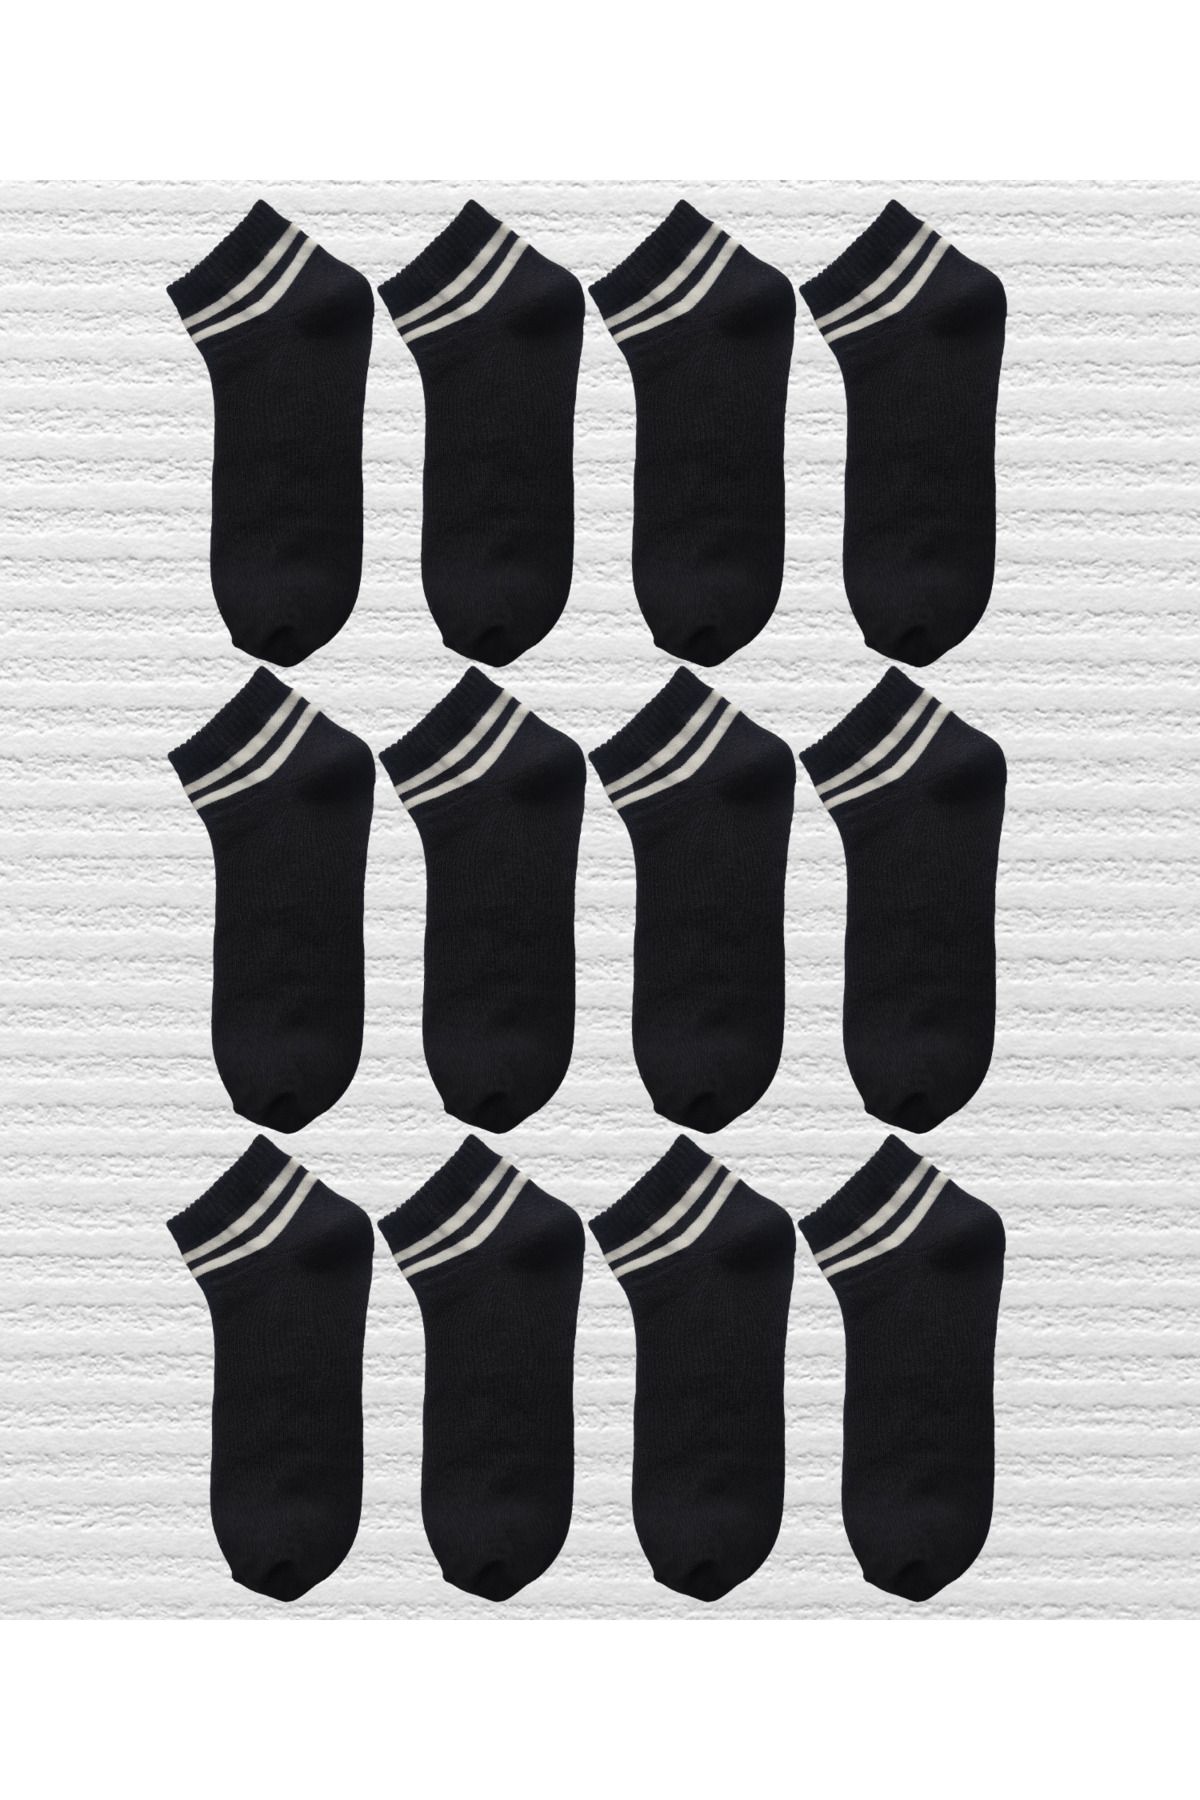 KAYSSOCK 12 Çift Unisex Şeritli Siyah Patik Çorap